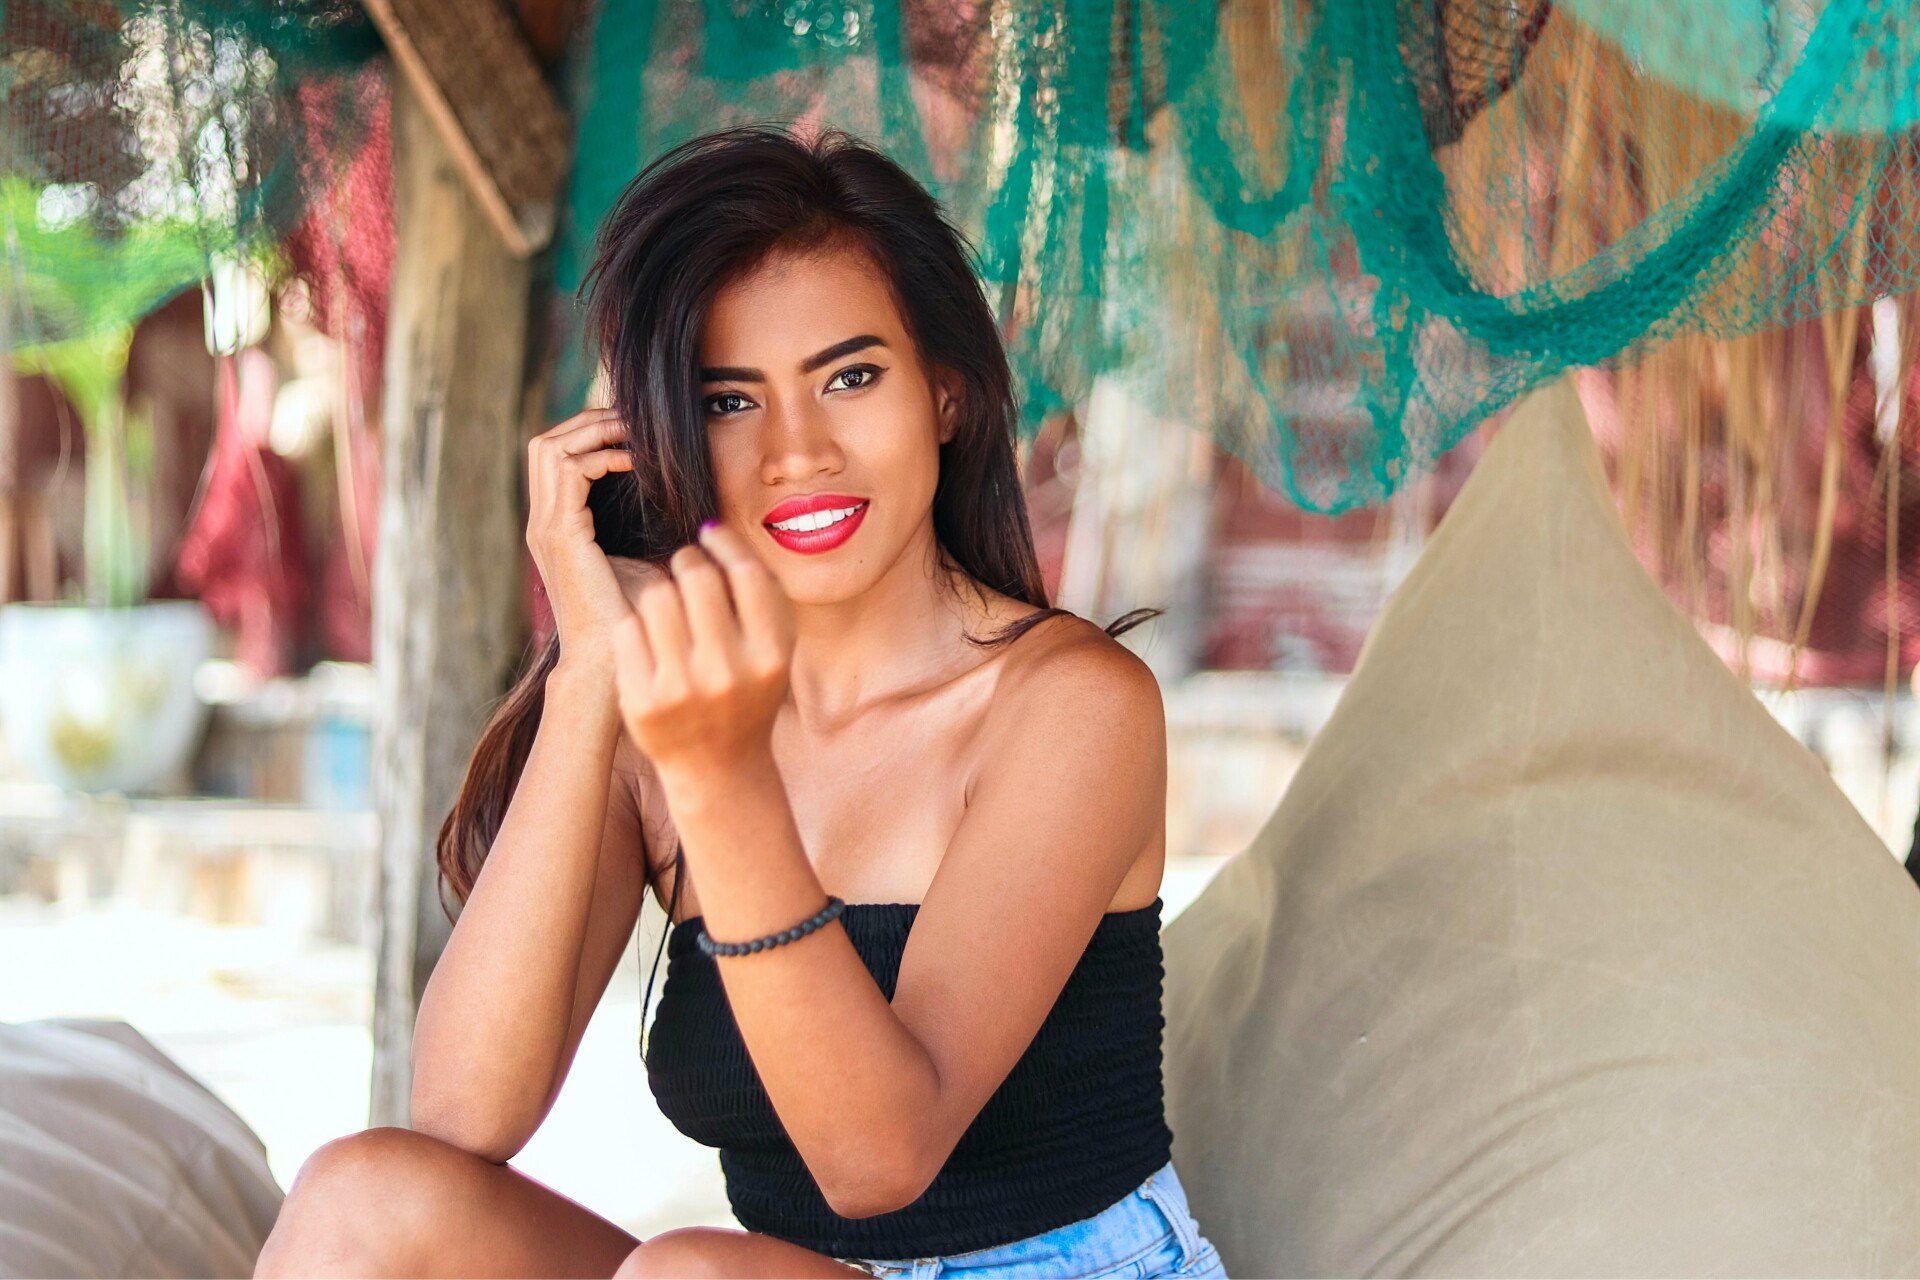 Girls From Venezuela – Best Way To Find Beautiful Woman